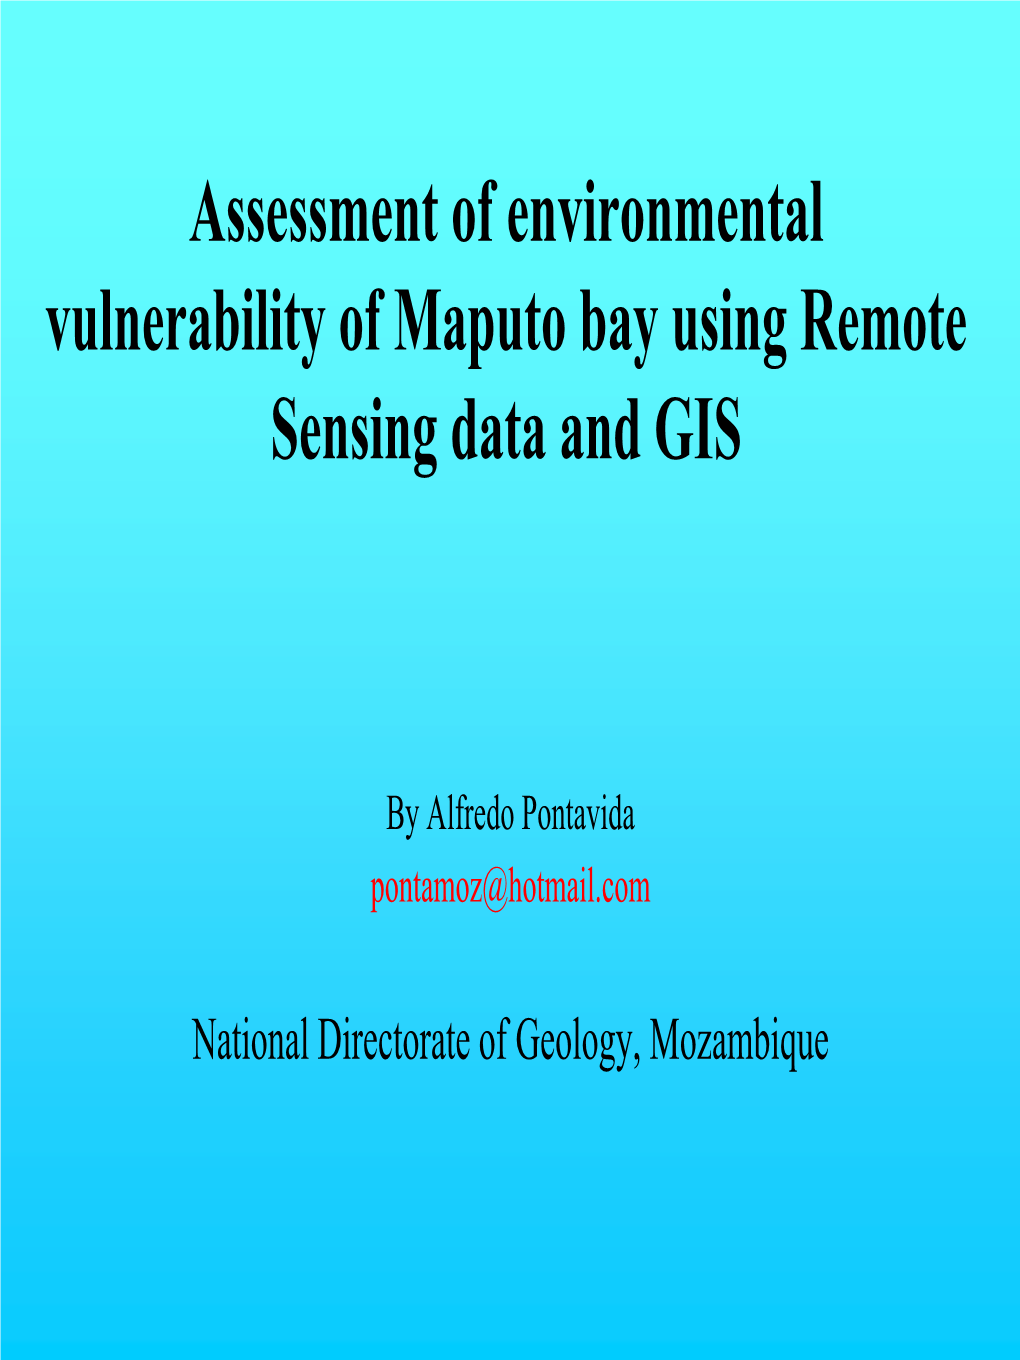 Assessment of Environmental Vulnerability of Maputo Bay Using Remote Sensing Data and GIS